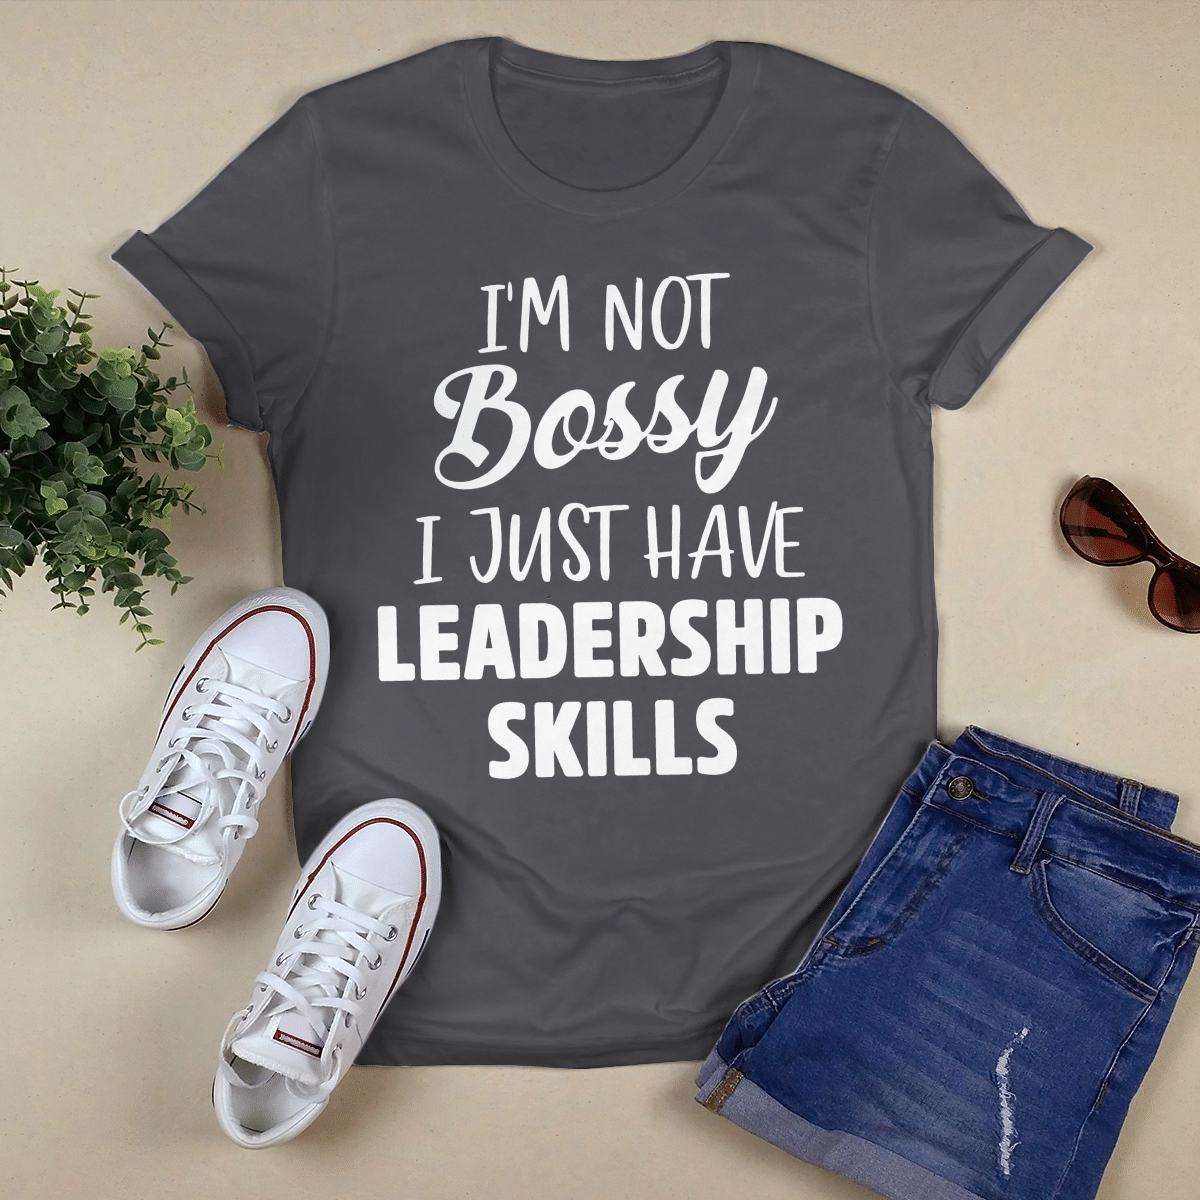 I_m Not Bossy shirt